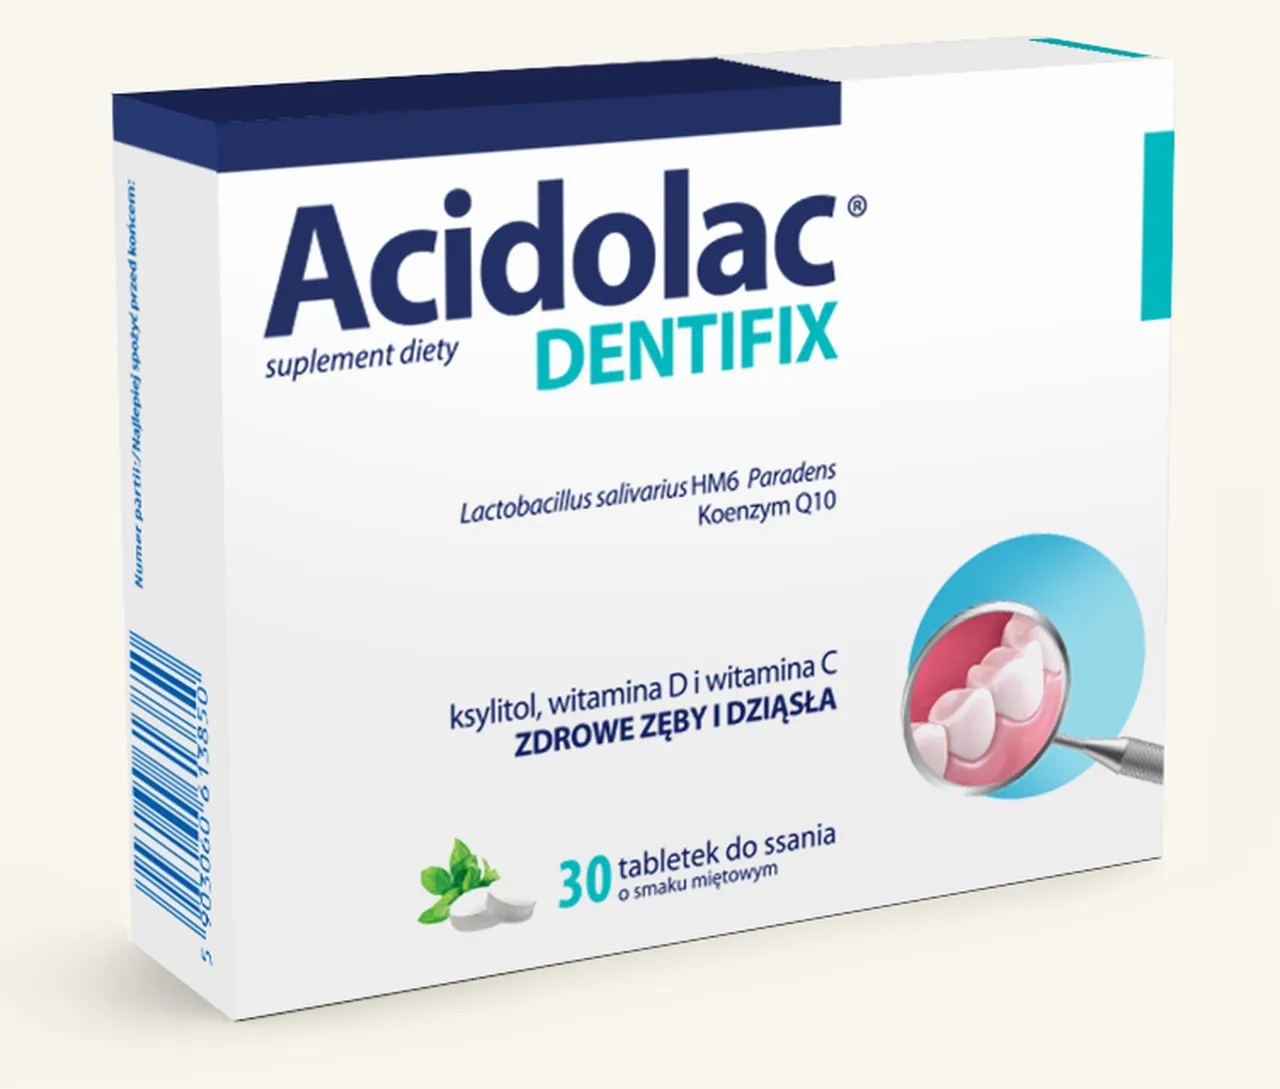 Acidolac Dentifix, suplement diety, smak miętowy, 30 tabletek do ssania